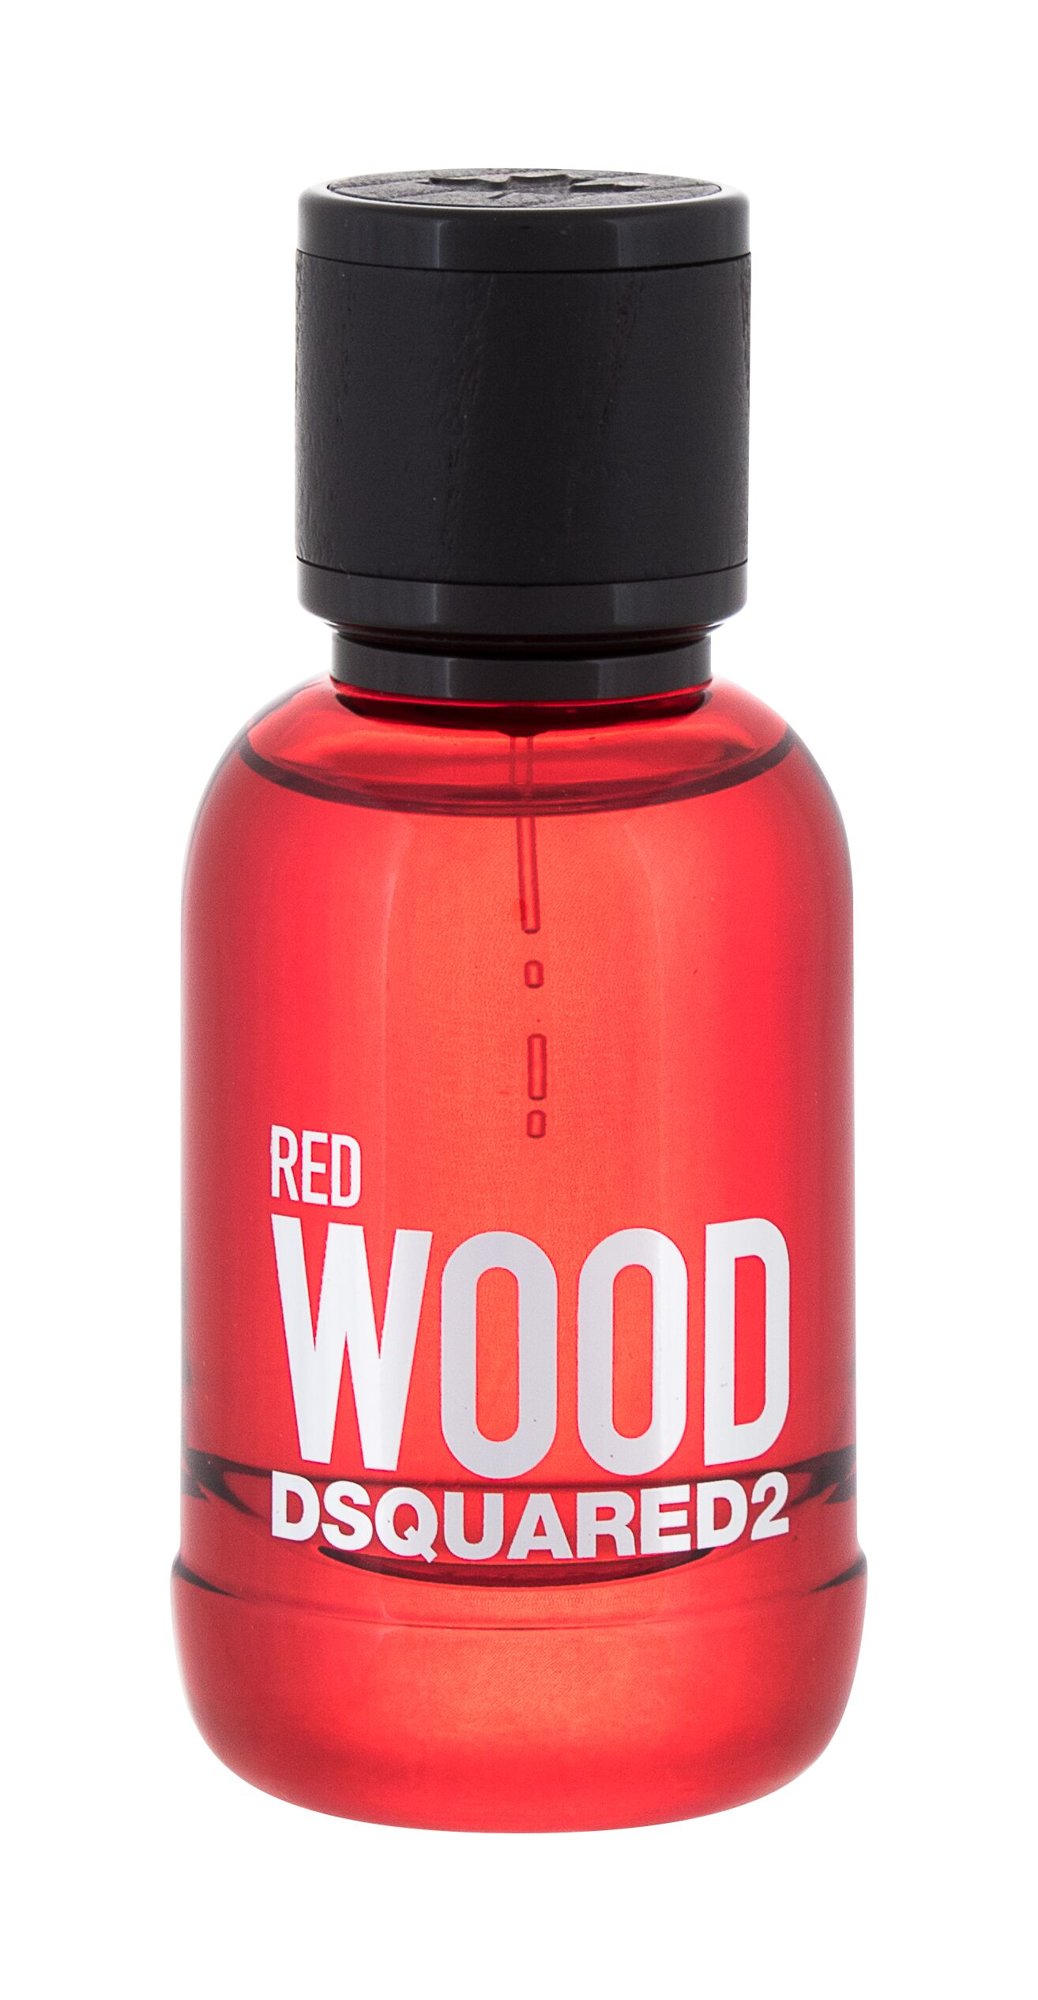 Dsquared2 Red Wood, Toaletní voda 50ml